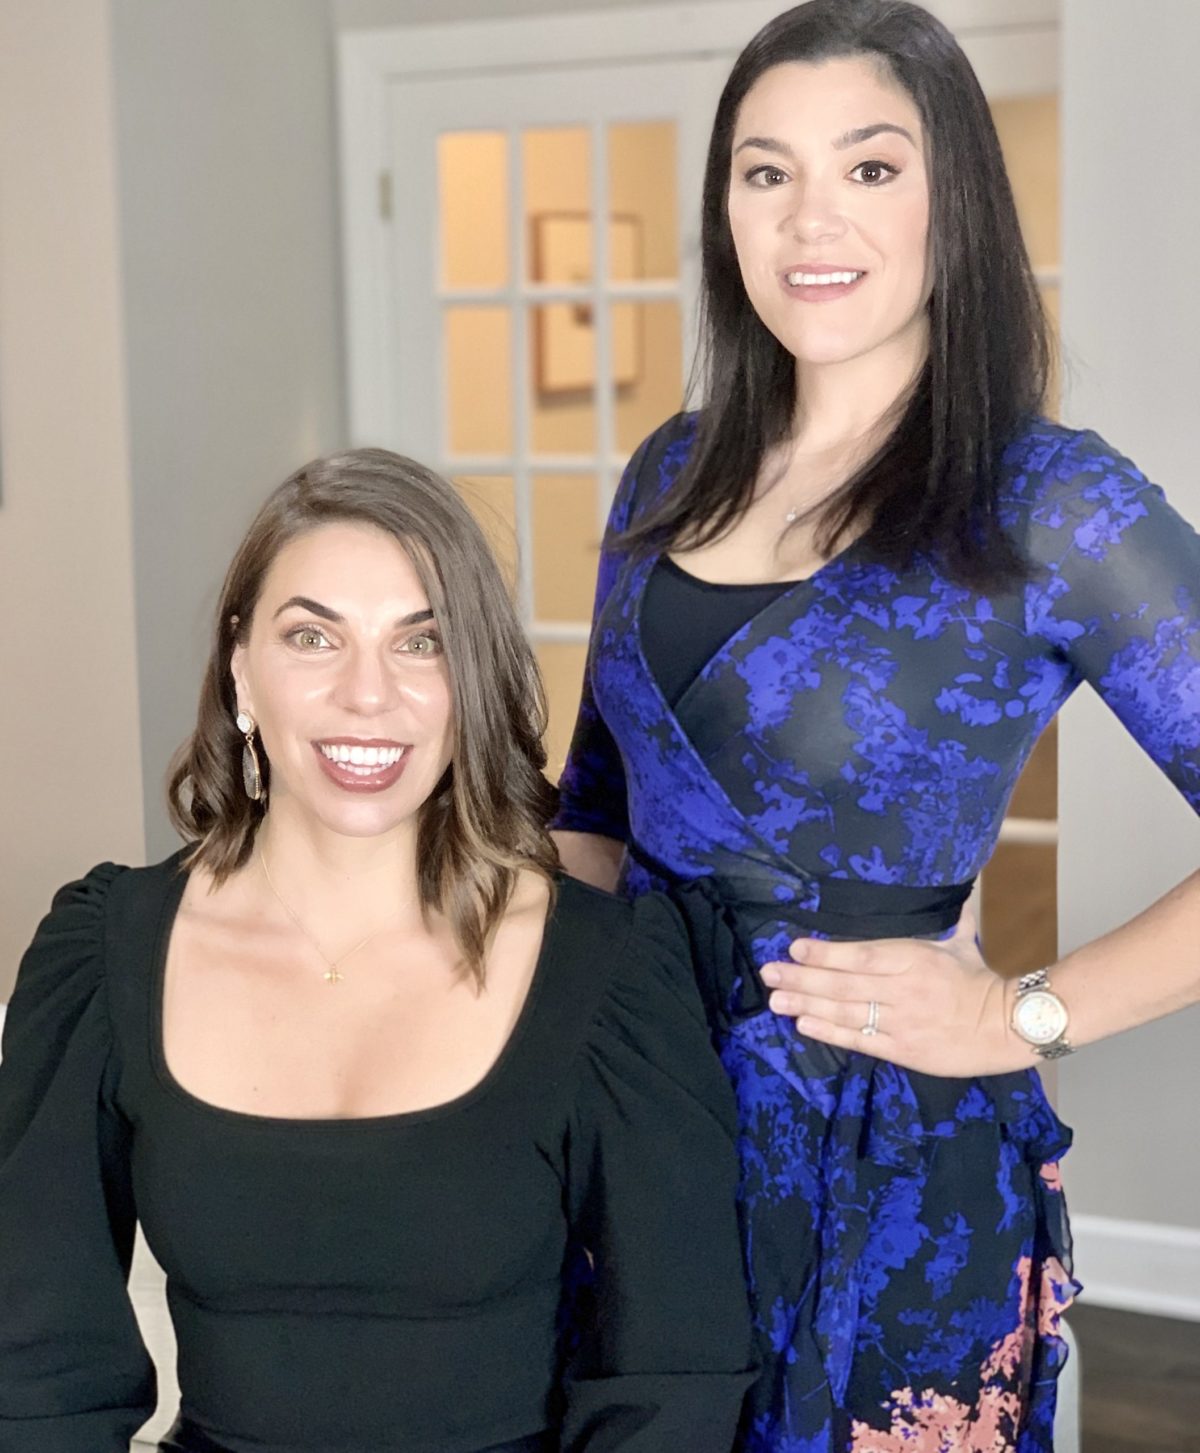 Trustate cofounders Tara Faquir (left) and Leah Del Percio.